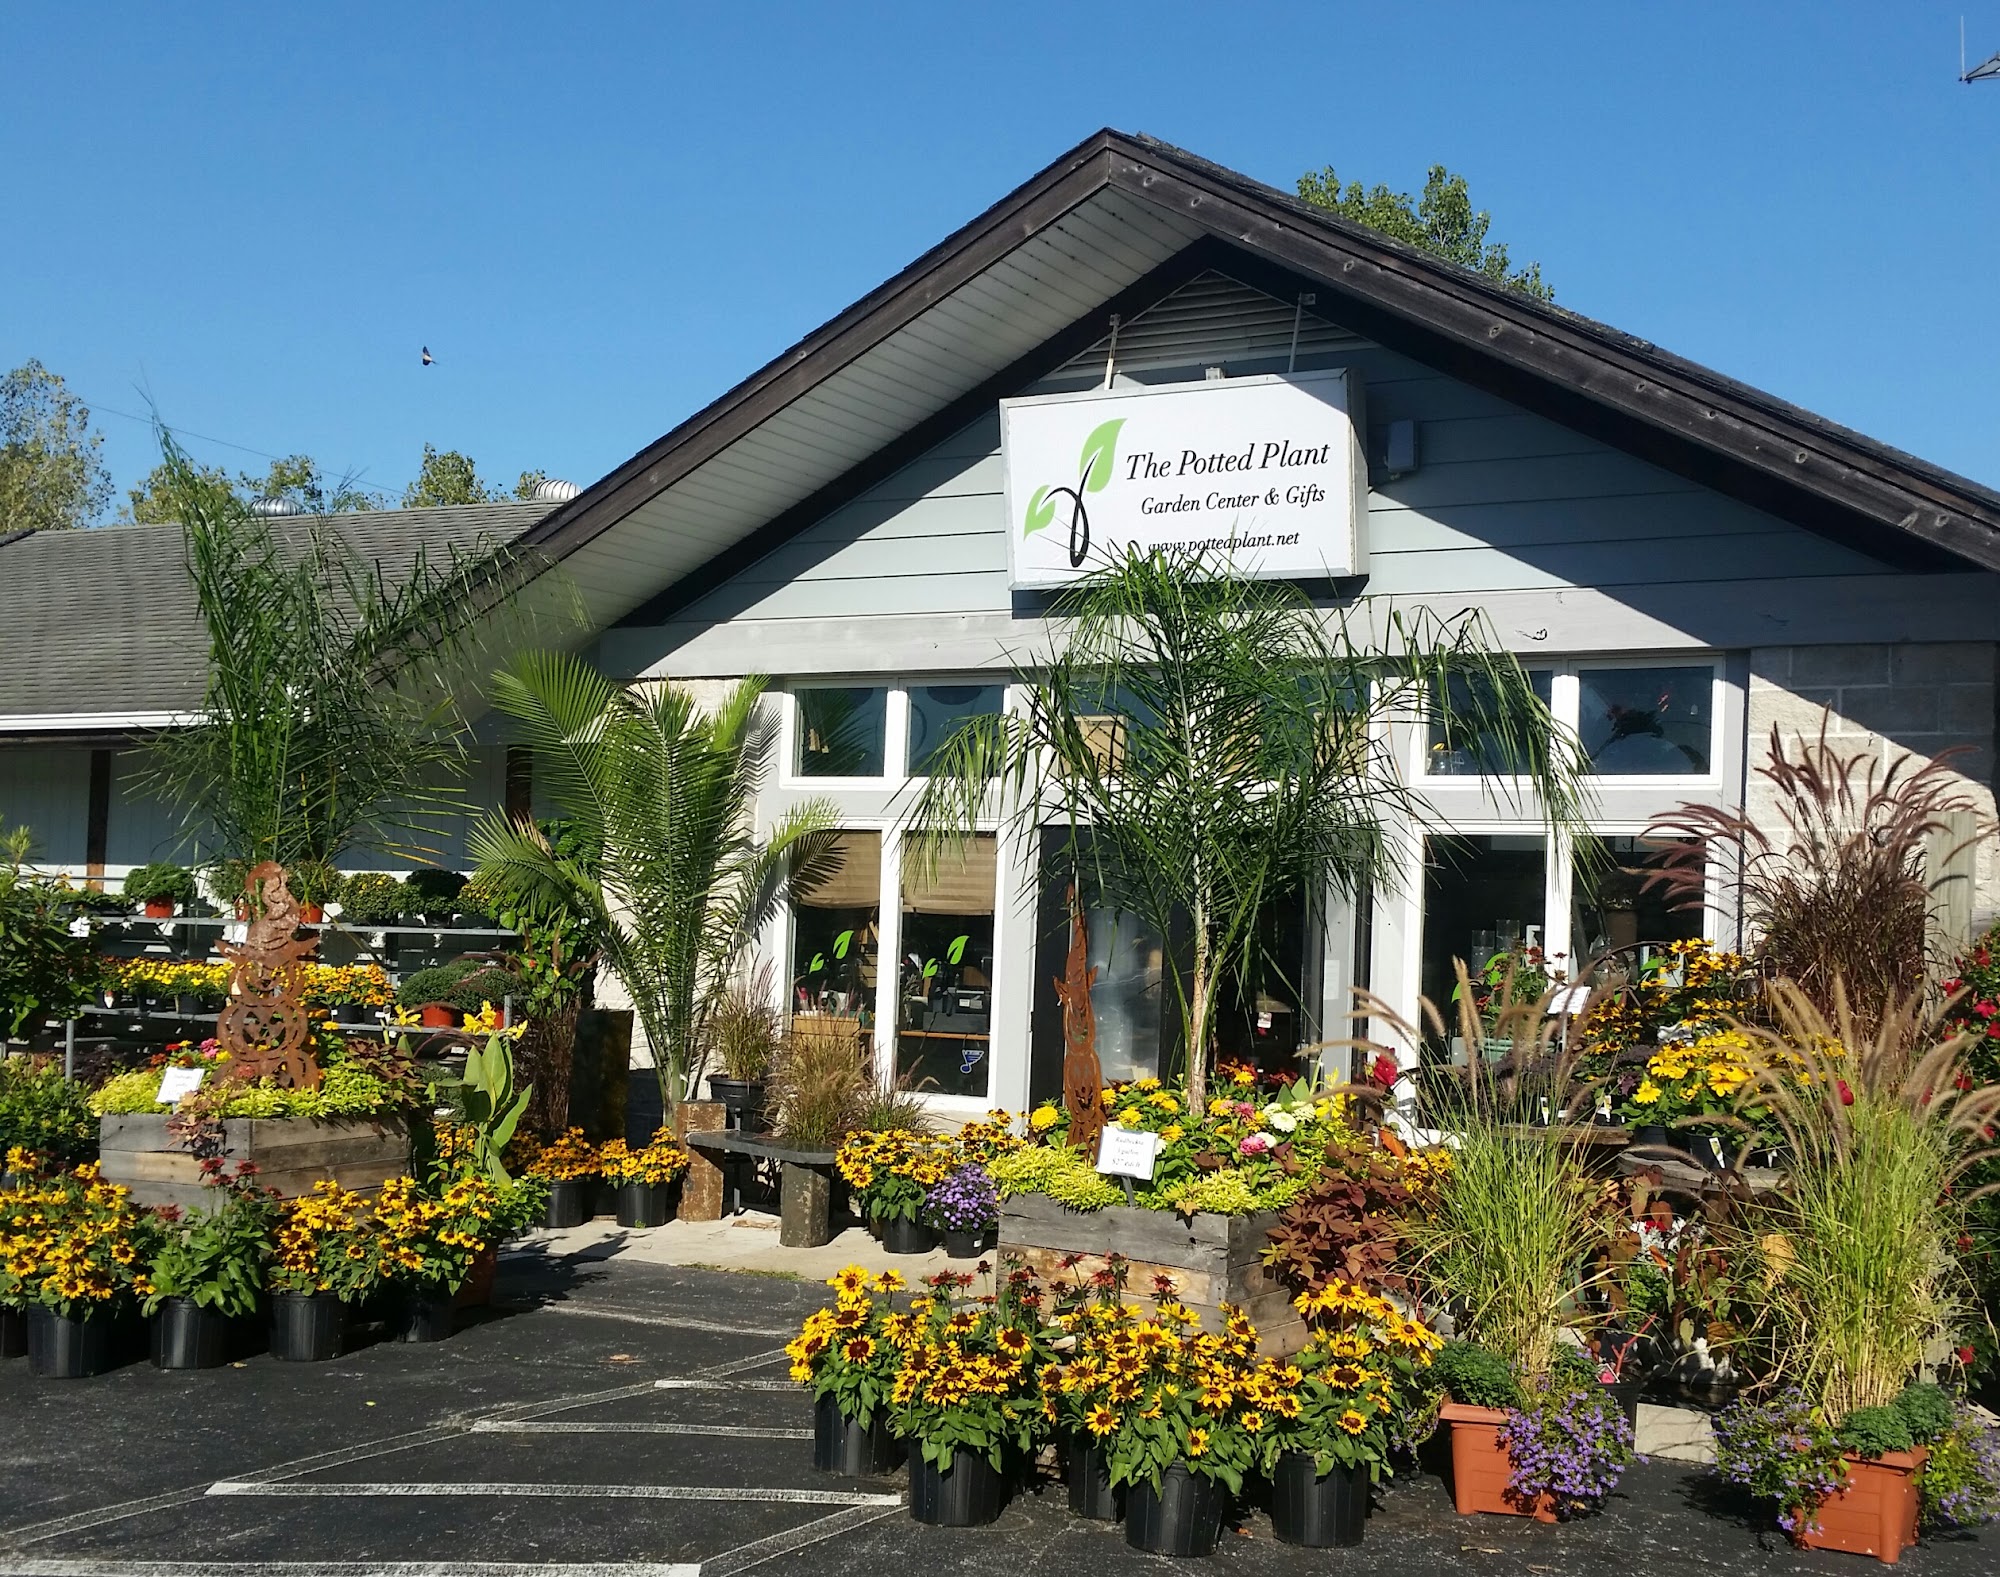 The Potted Plant Garden Center & Florist